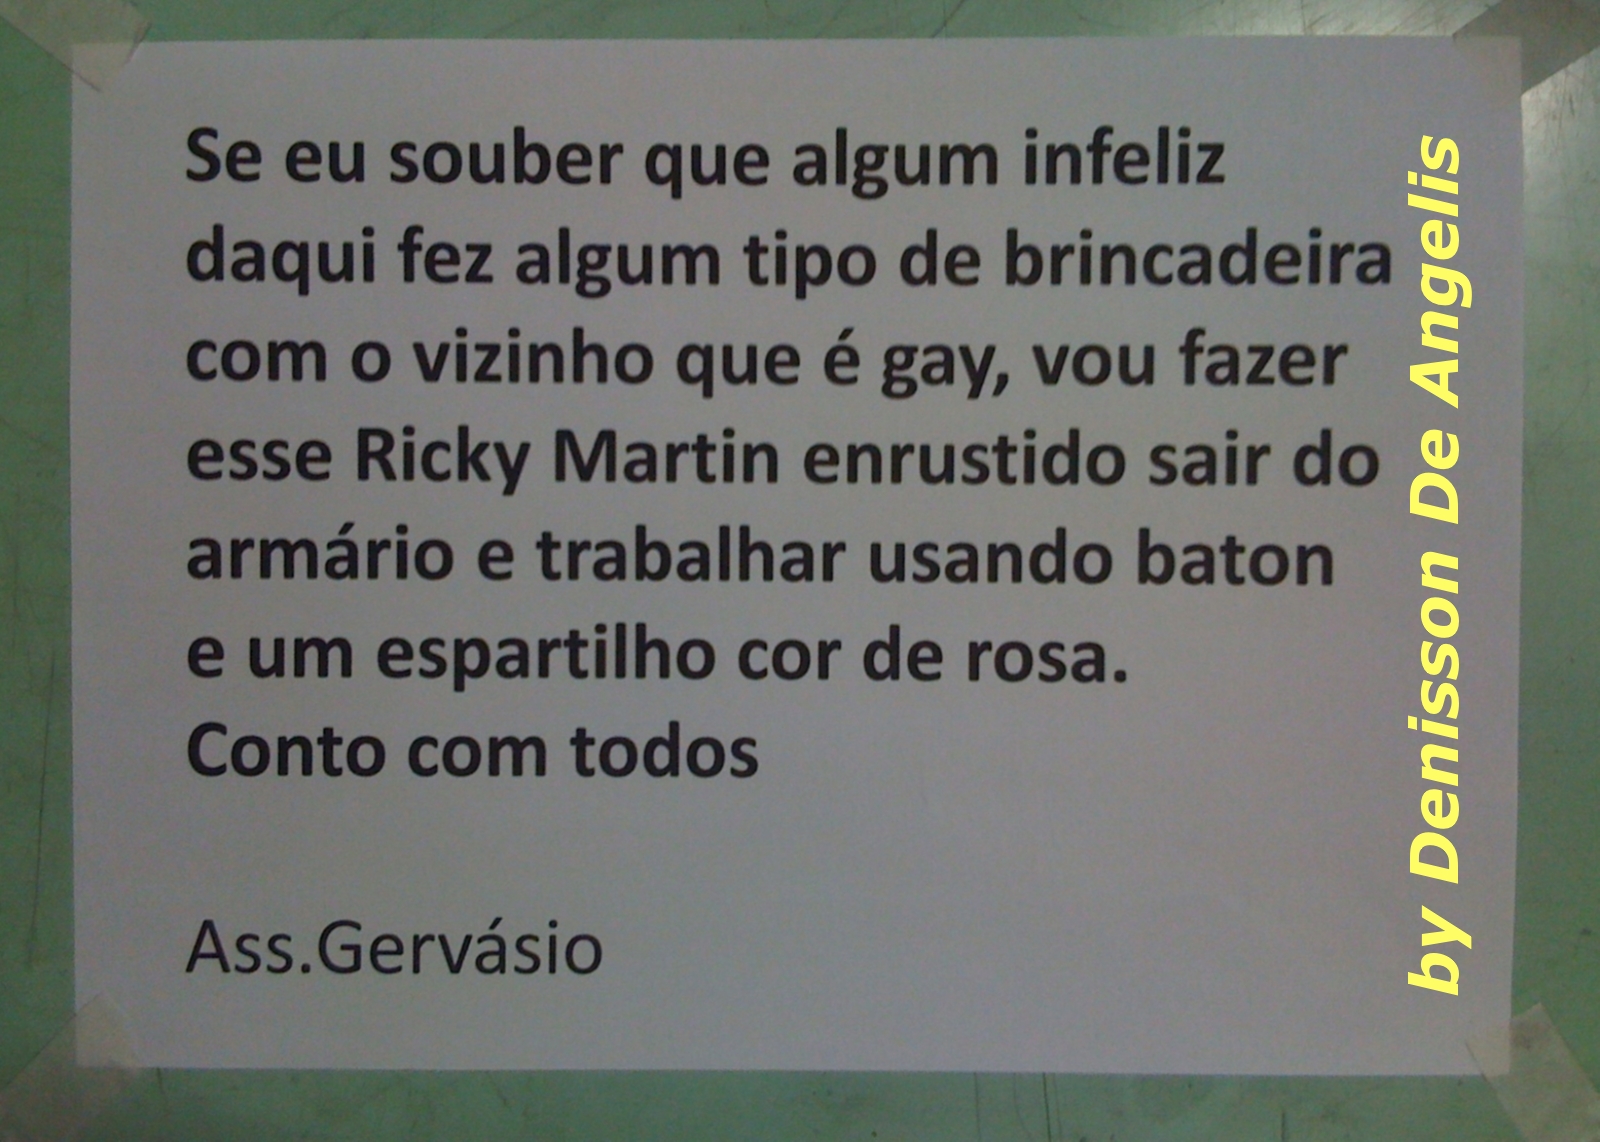 http://baudalayla.files.wordpress.com/2011/03/gervasio-em-resposta-ao-bolsonaro.jpg